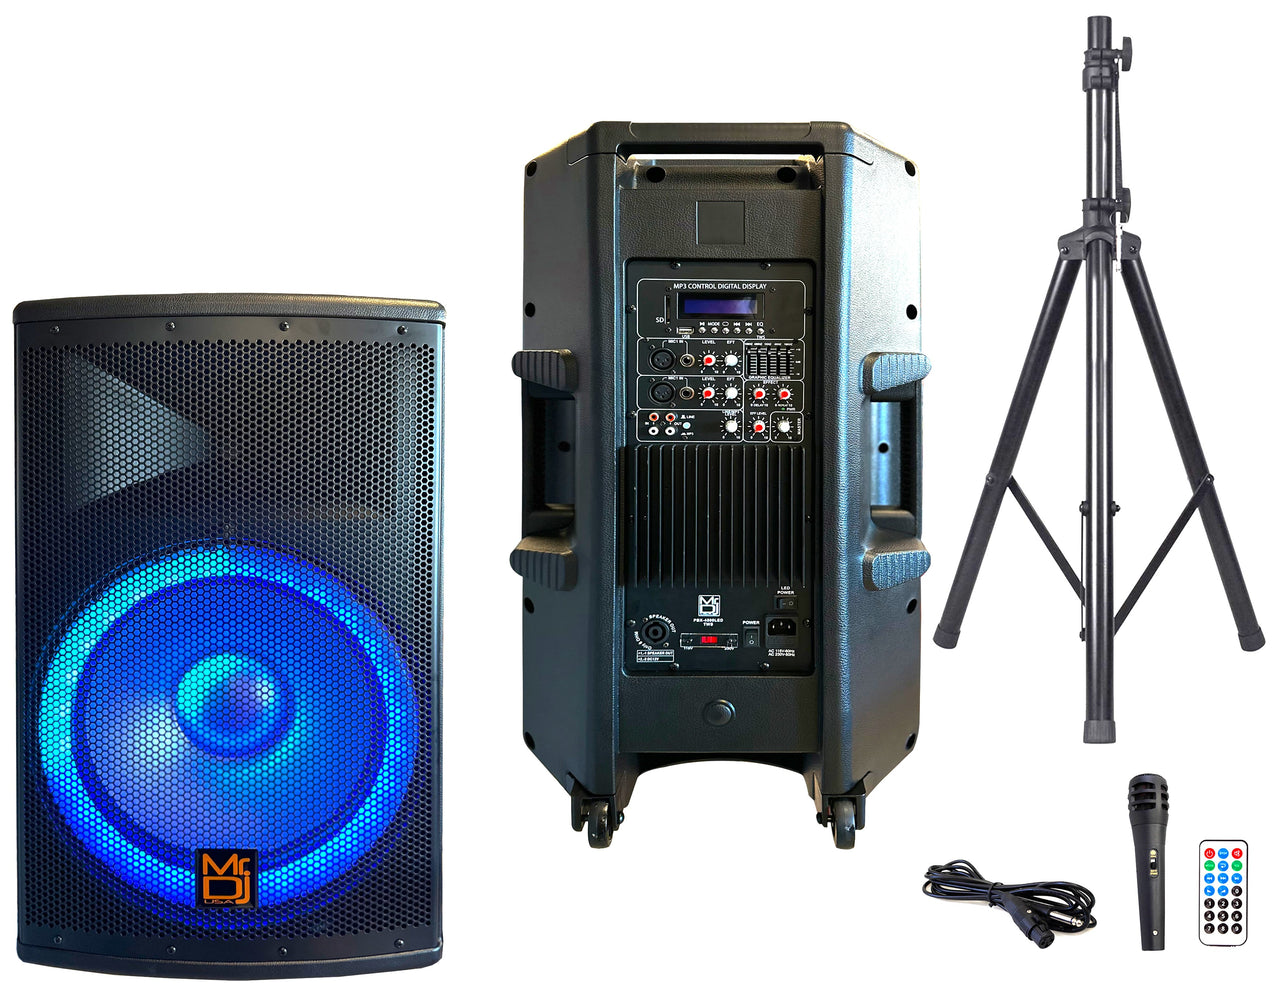 MR DJ PBX4500LED 15" 2-Way PA DJ 4500W Active Powered Bluetooth Karaoke Speaker LED Lighting + Speaker Stand